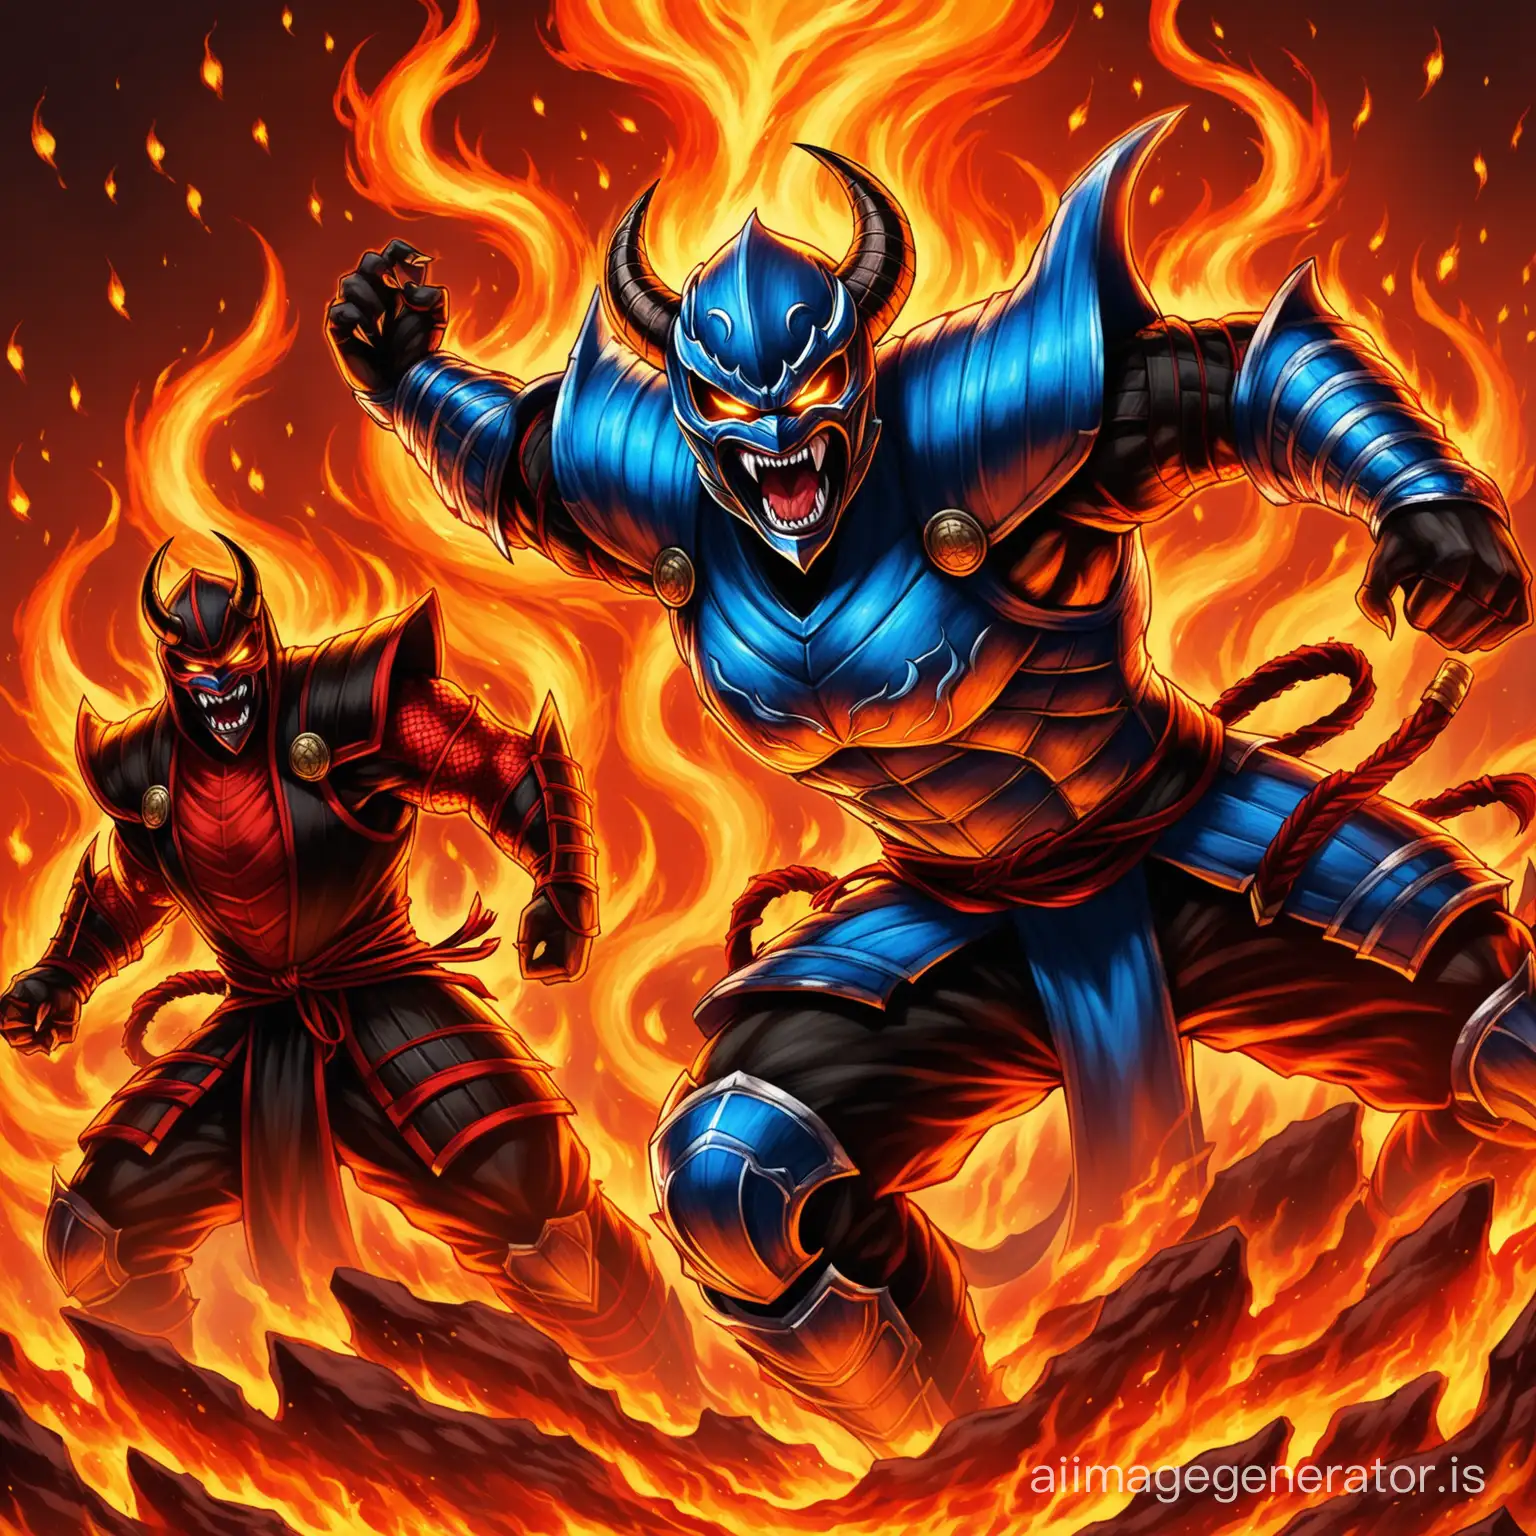 Sub-Zero, Mortal Kombat ninja, fiery demon-ninja, mask in the form of a roaring mouth with fangs, fiery demon, fiery eyes, covered in flames, burning demon, evil demon, fiery ninja, chitinous armor, lava veins on the armor